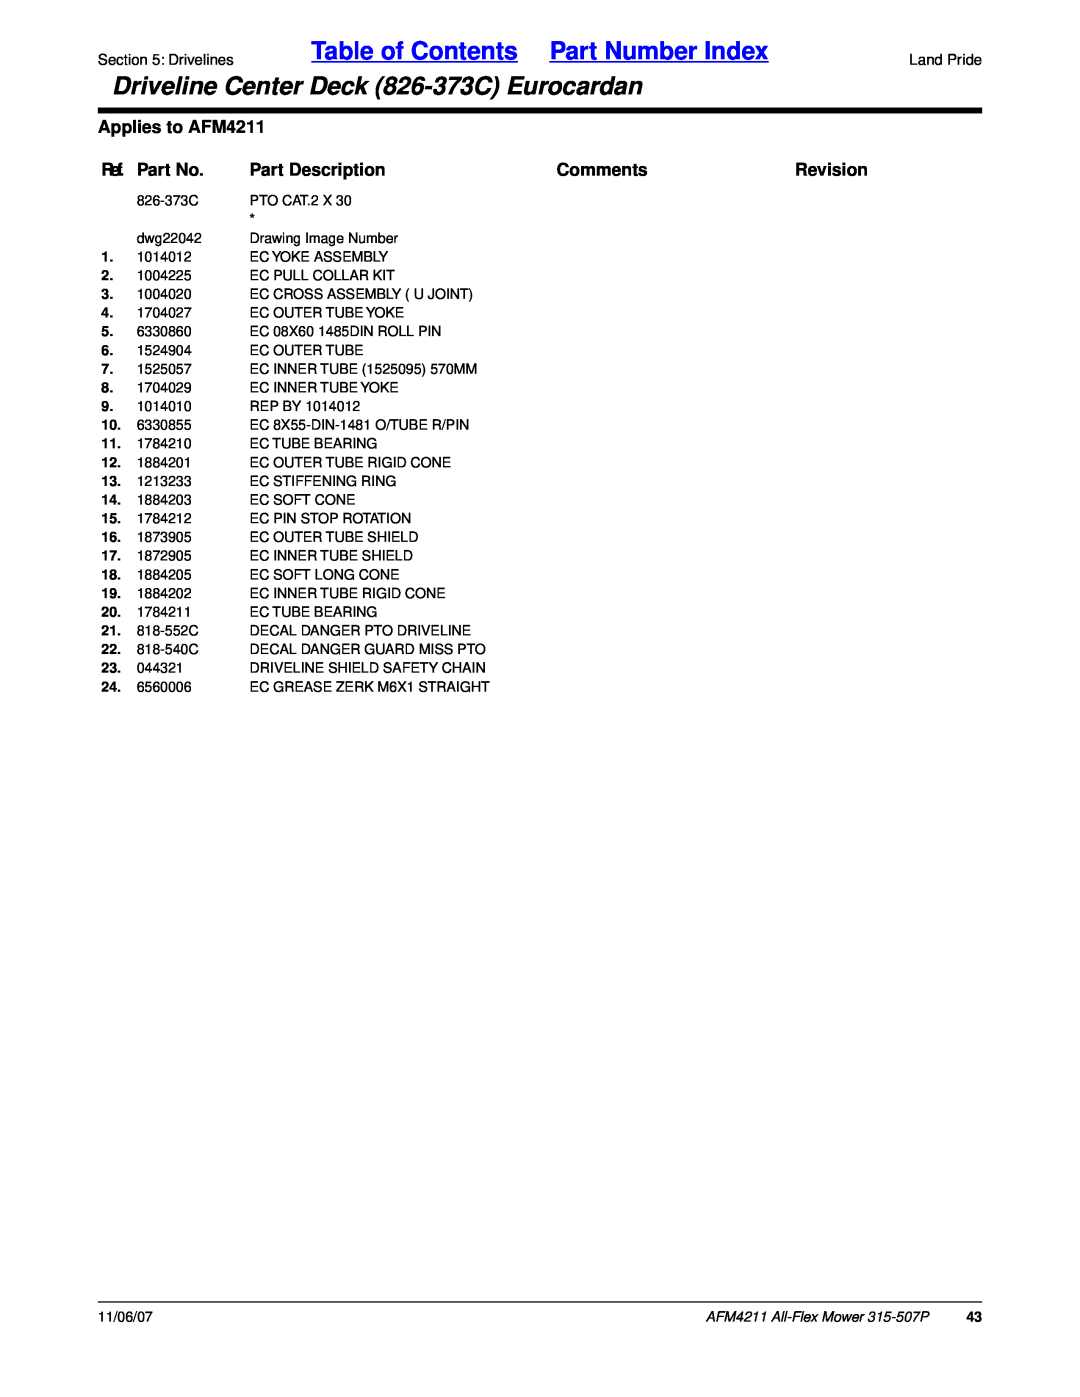 Land Pride Table of Contents Part Number Index, Driveline Center Deck 826-373CEurocardan, Applies to AFM4211, Comments 